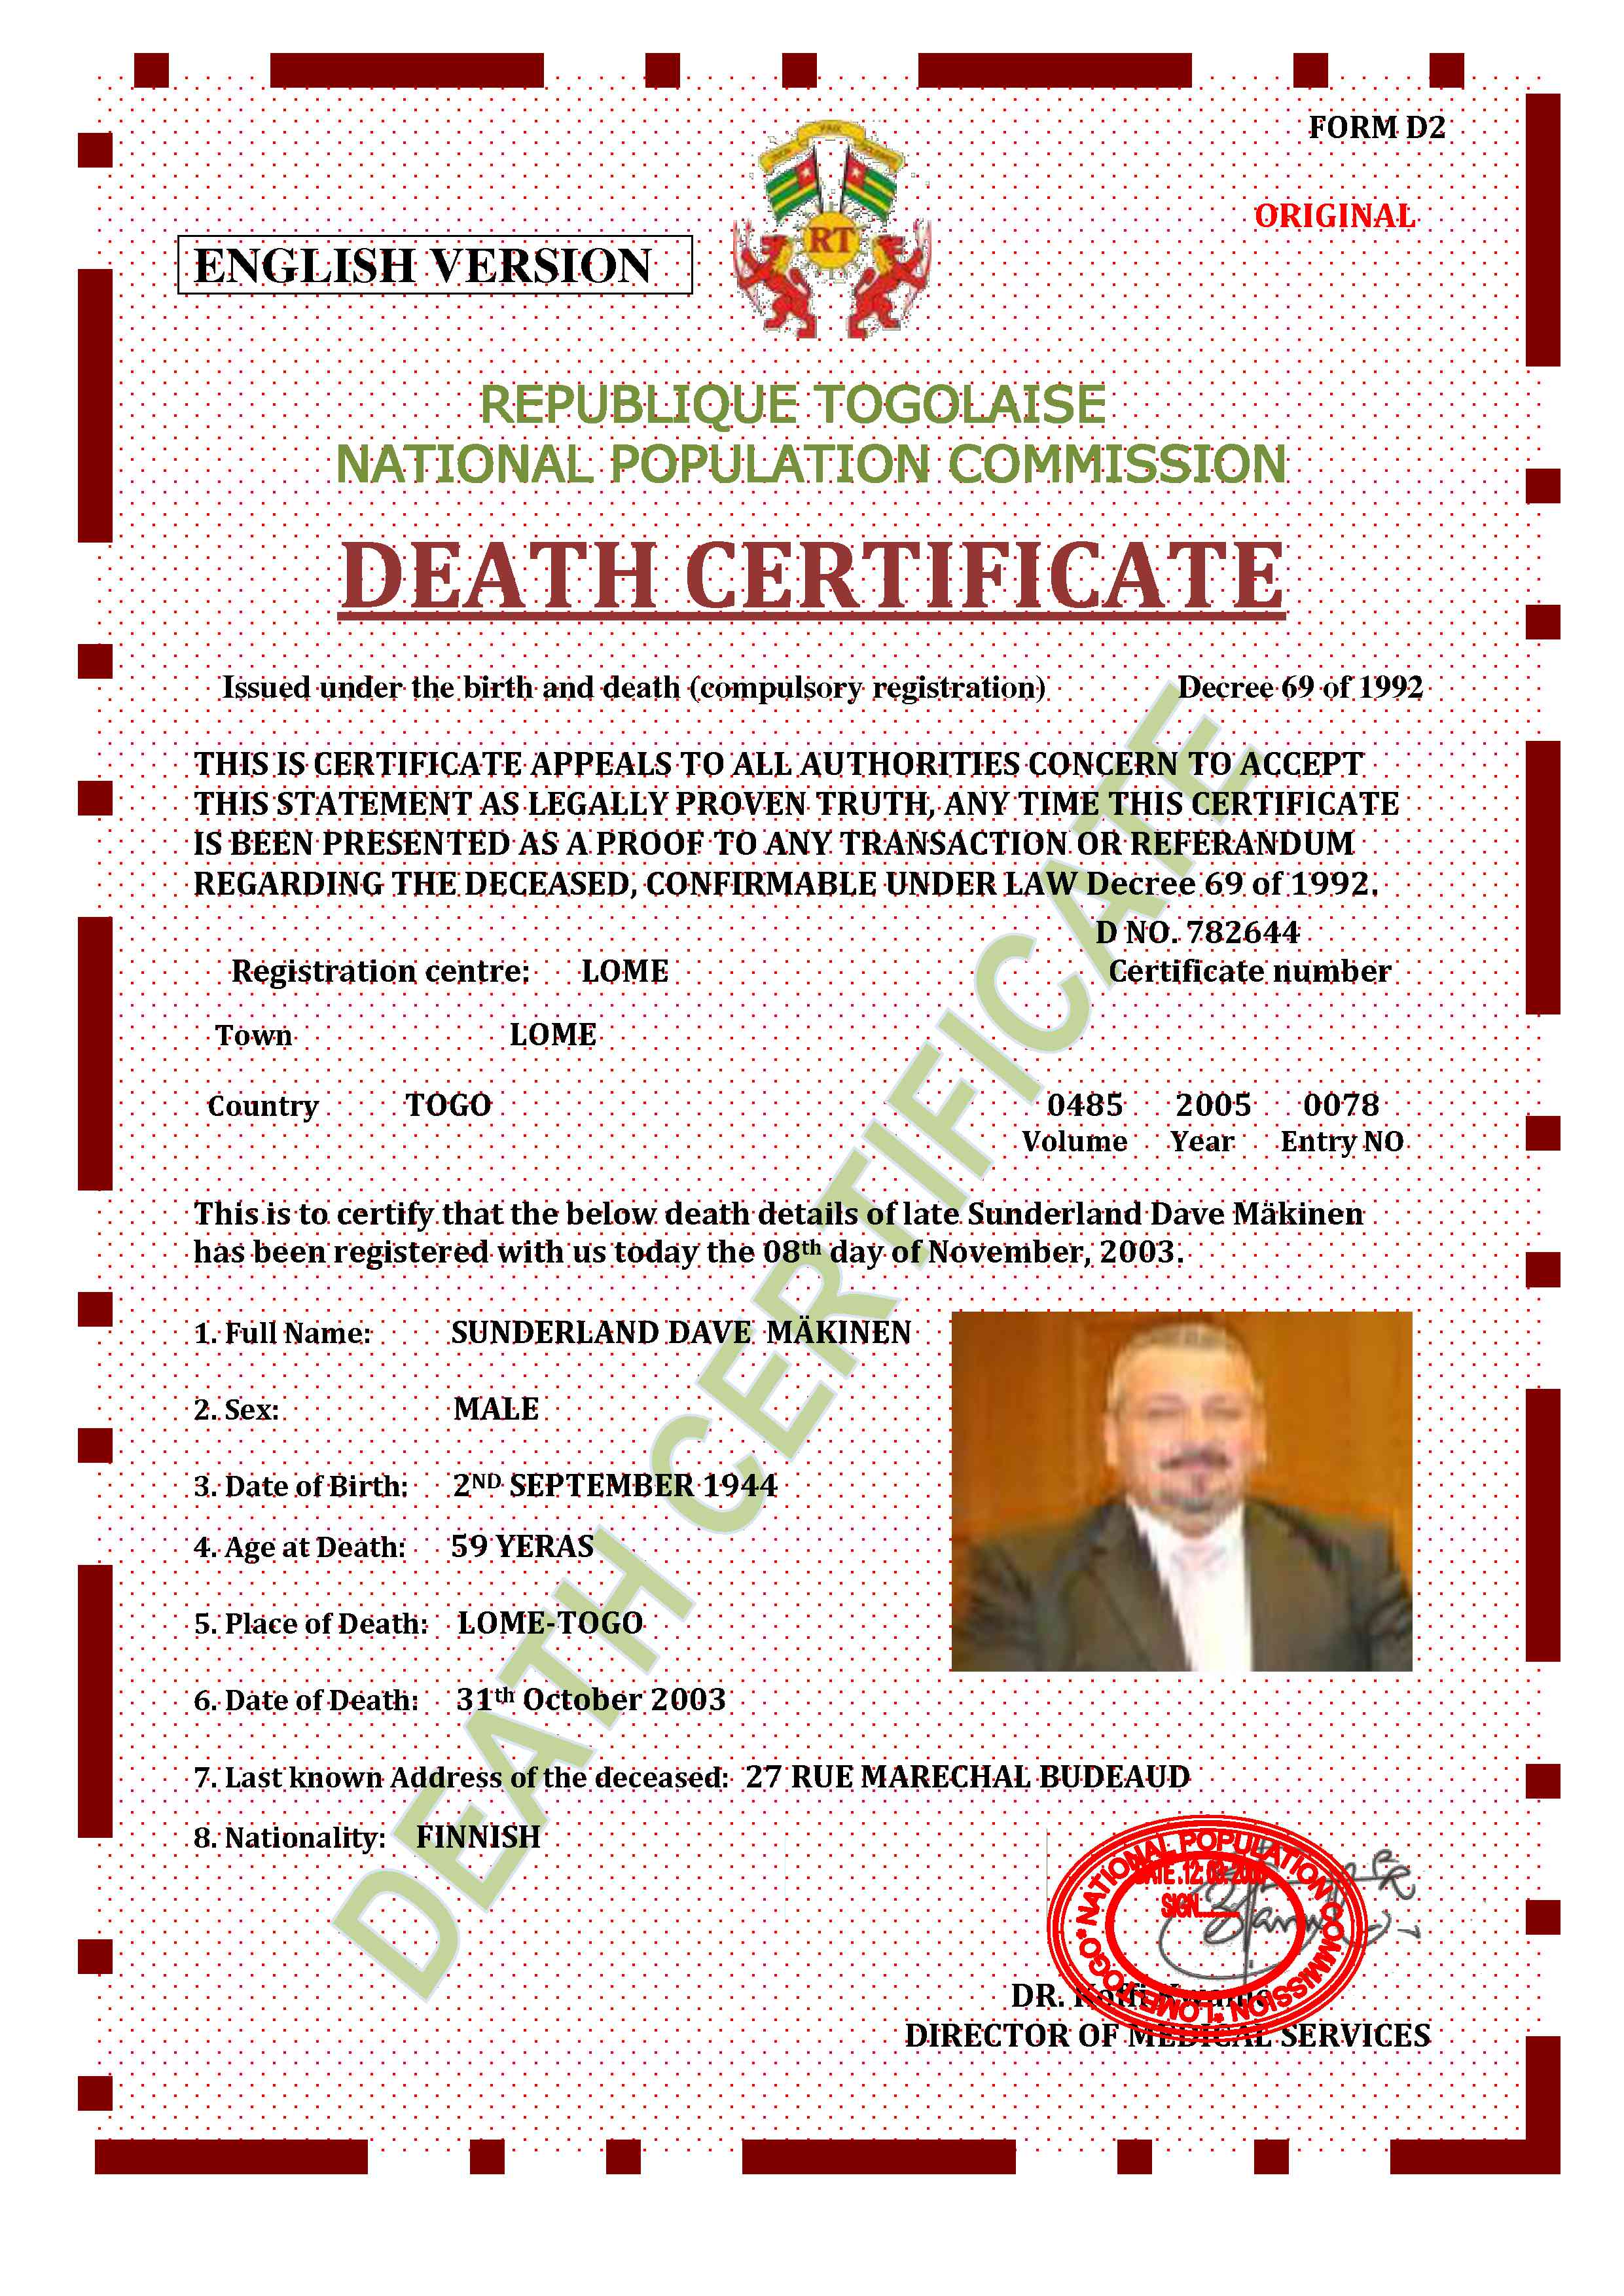 death_certificate_to_mr_sunderland_dave_makinen.jpg